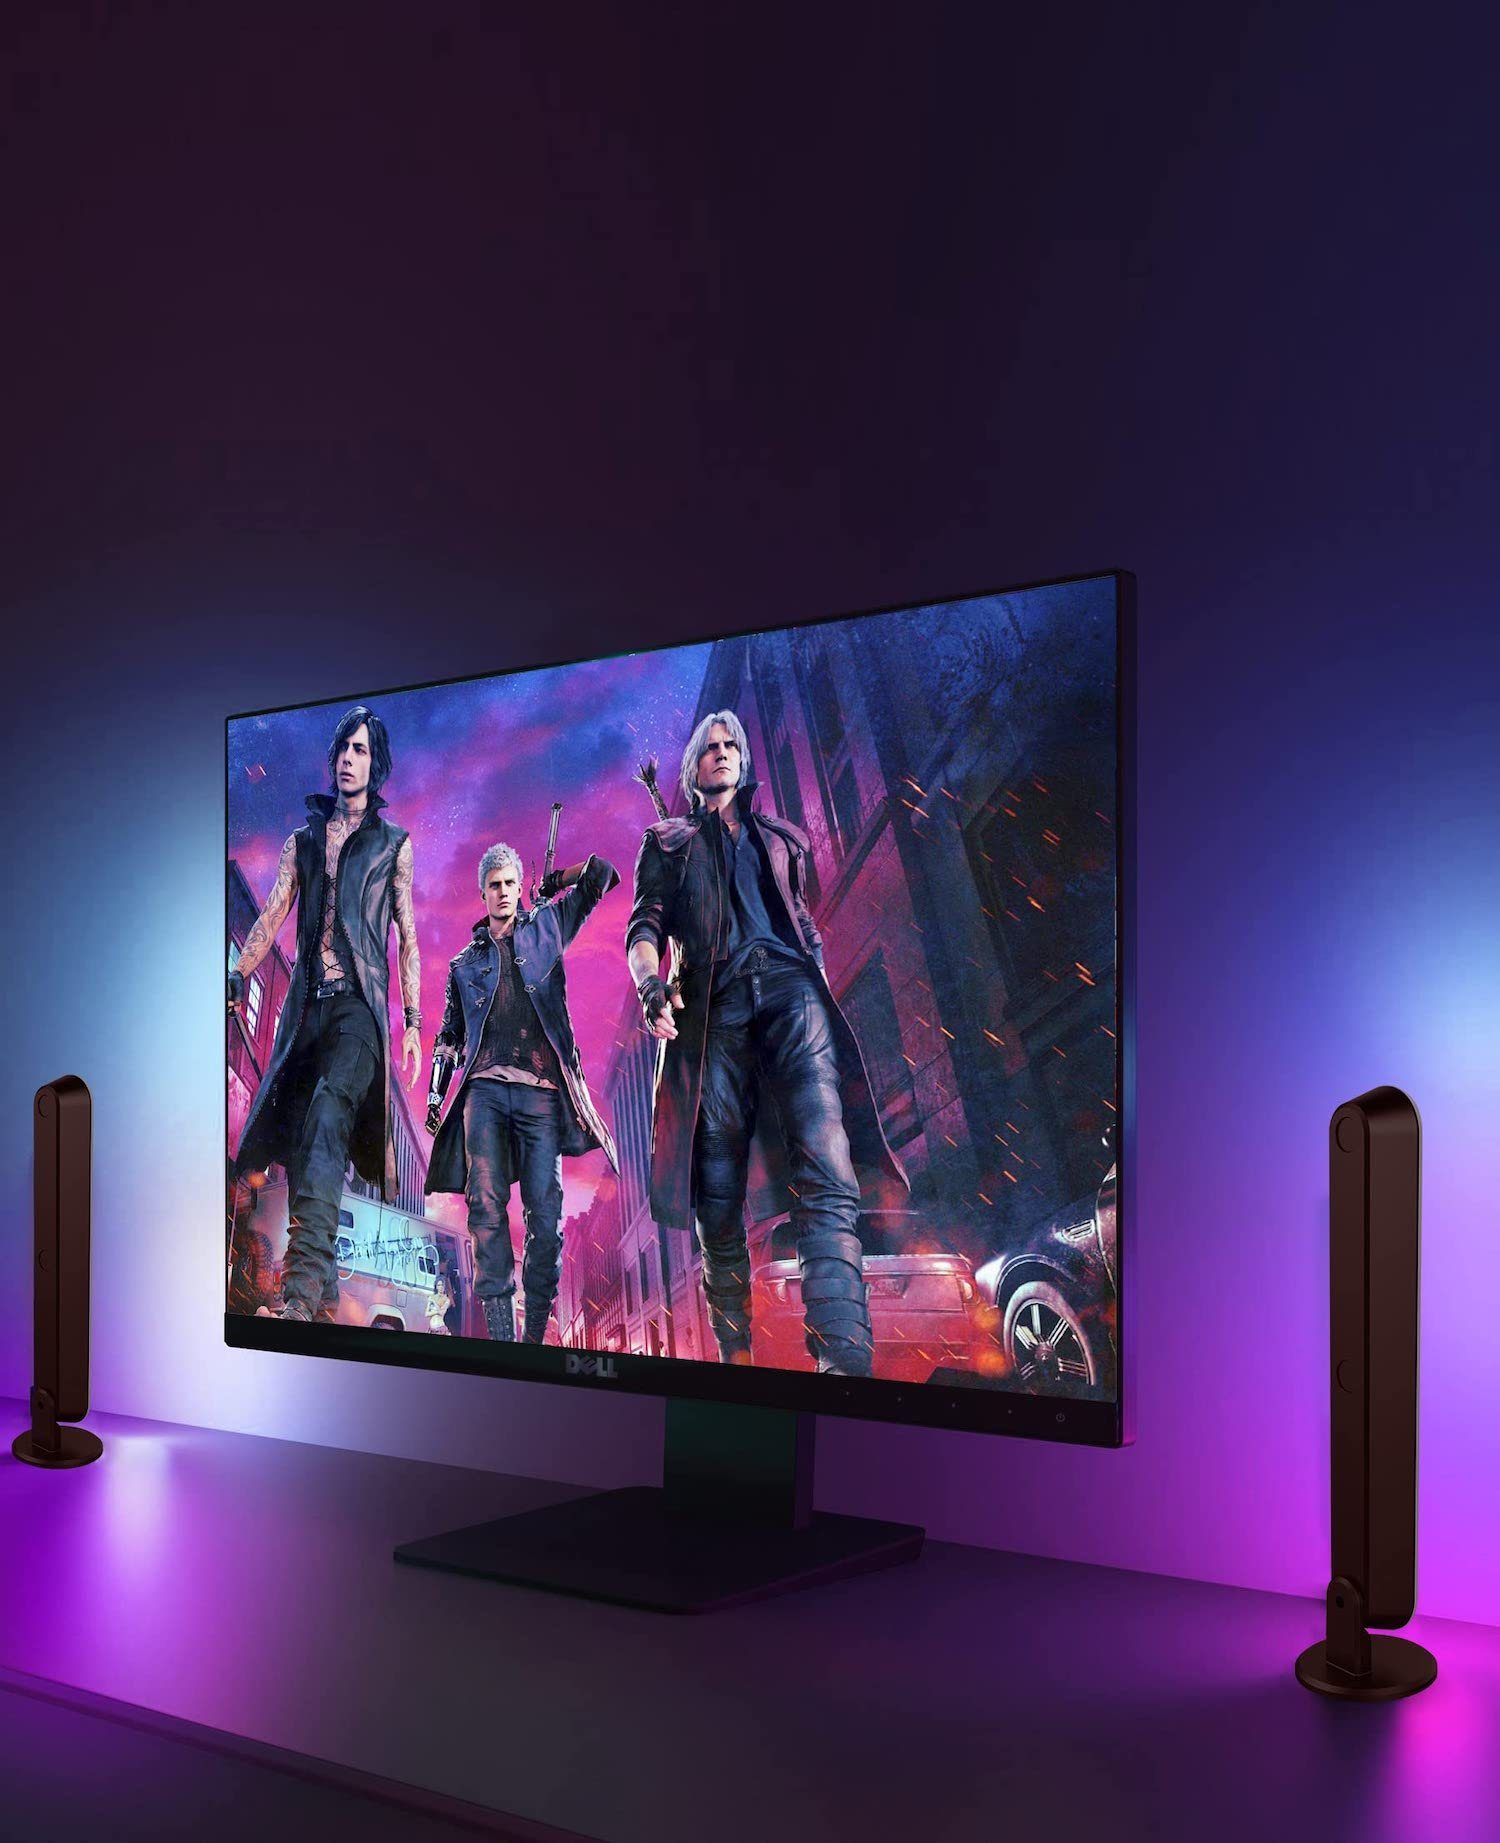 Gaming RGB Lampe, Sync Alexa PC Hintergrundleuchte TV LED RGB Smart Woward Smarte Music 2er